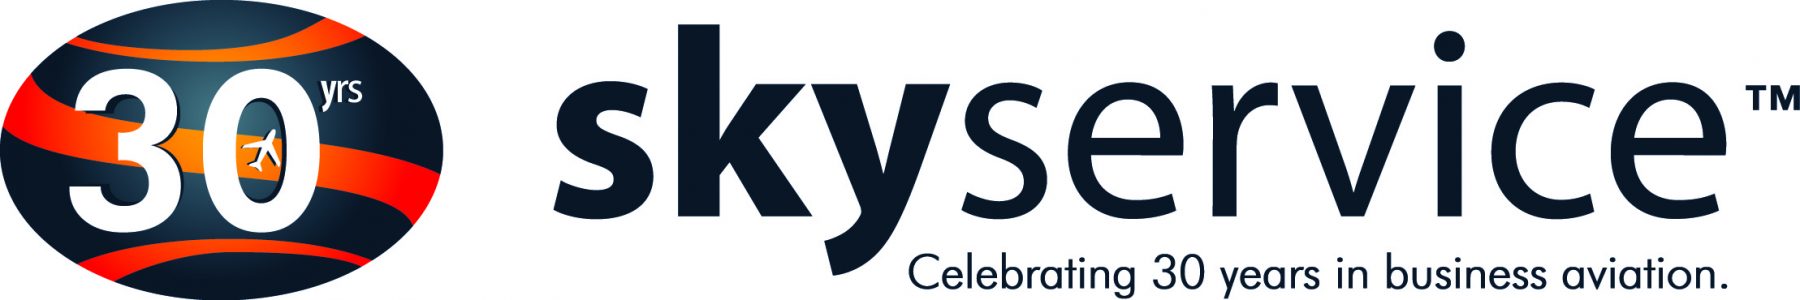 Skyservice Celebrating 30 Years